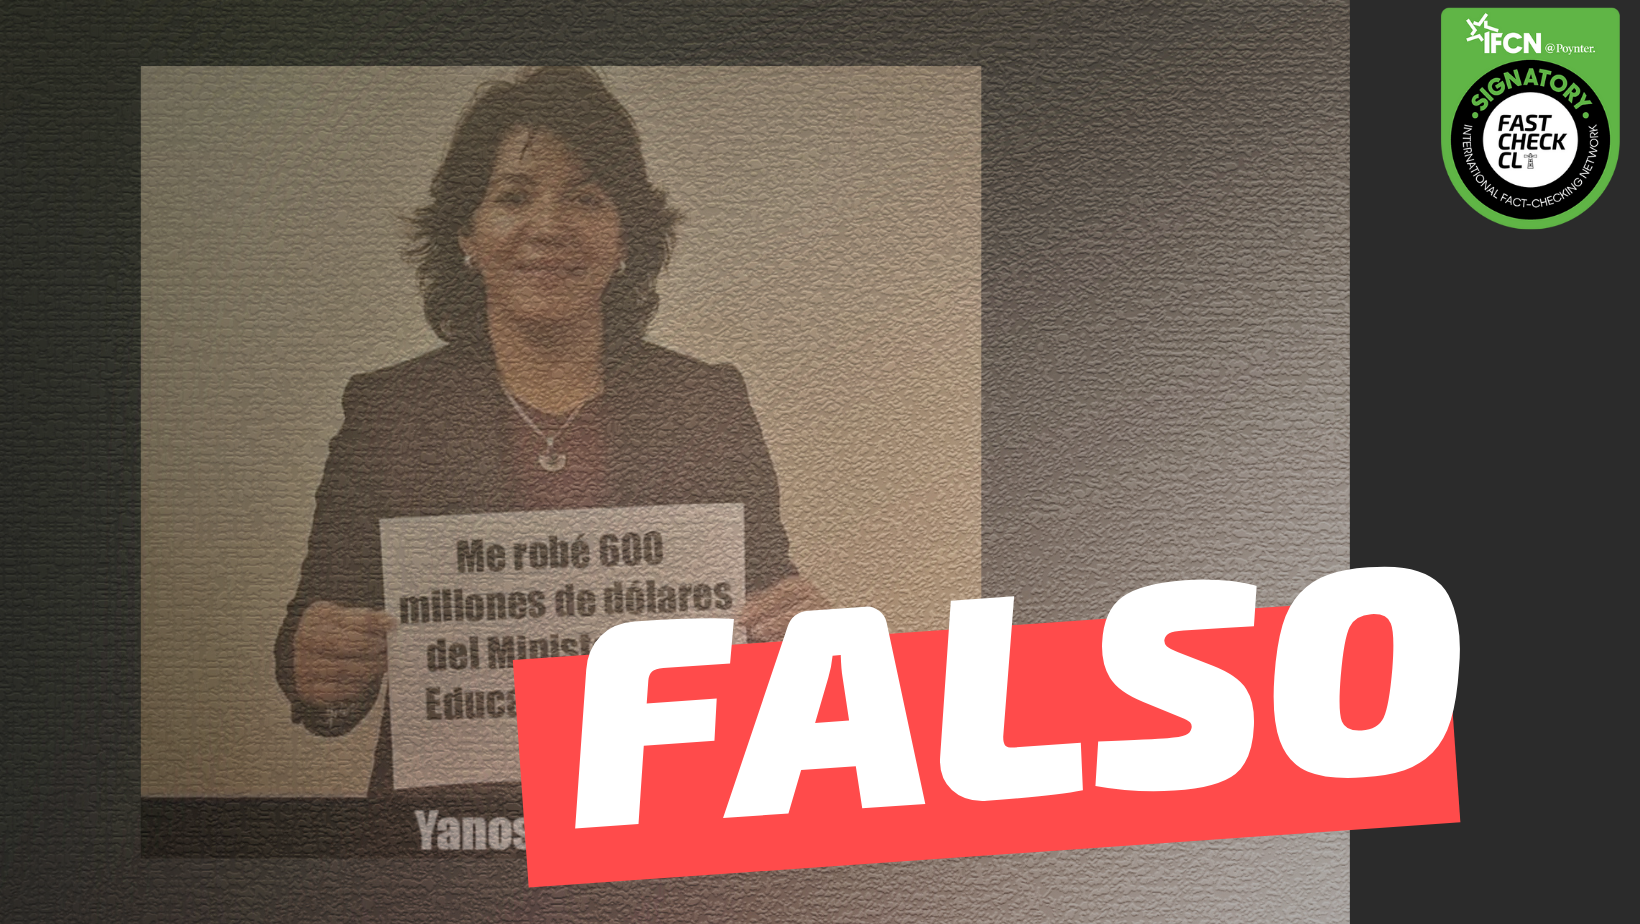 You are currently viewing Yasna Provoste se rob贸 600 millones de d贸lares del Ministerio de Educaci贸n: #Falso